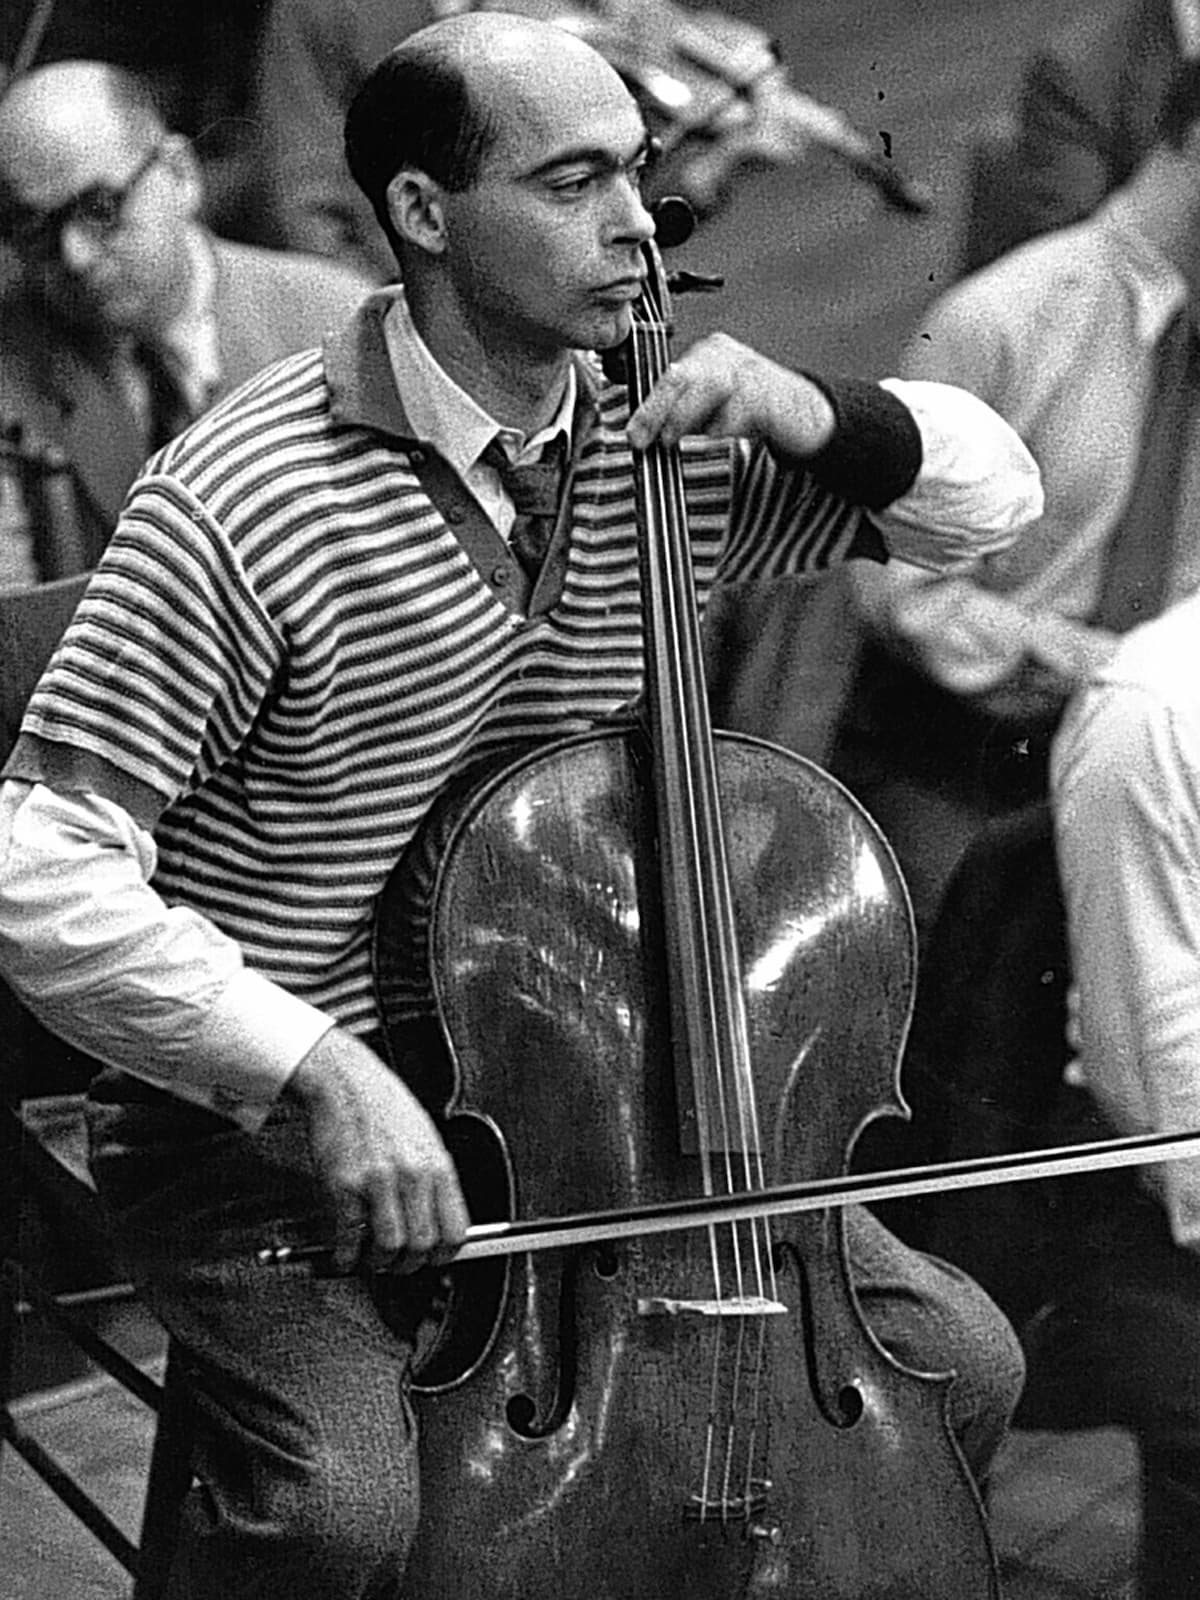 János Starker playing the cello